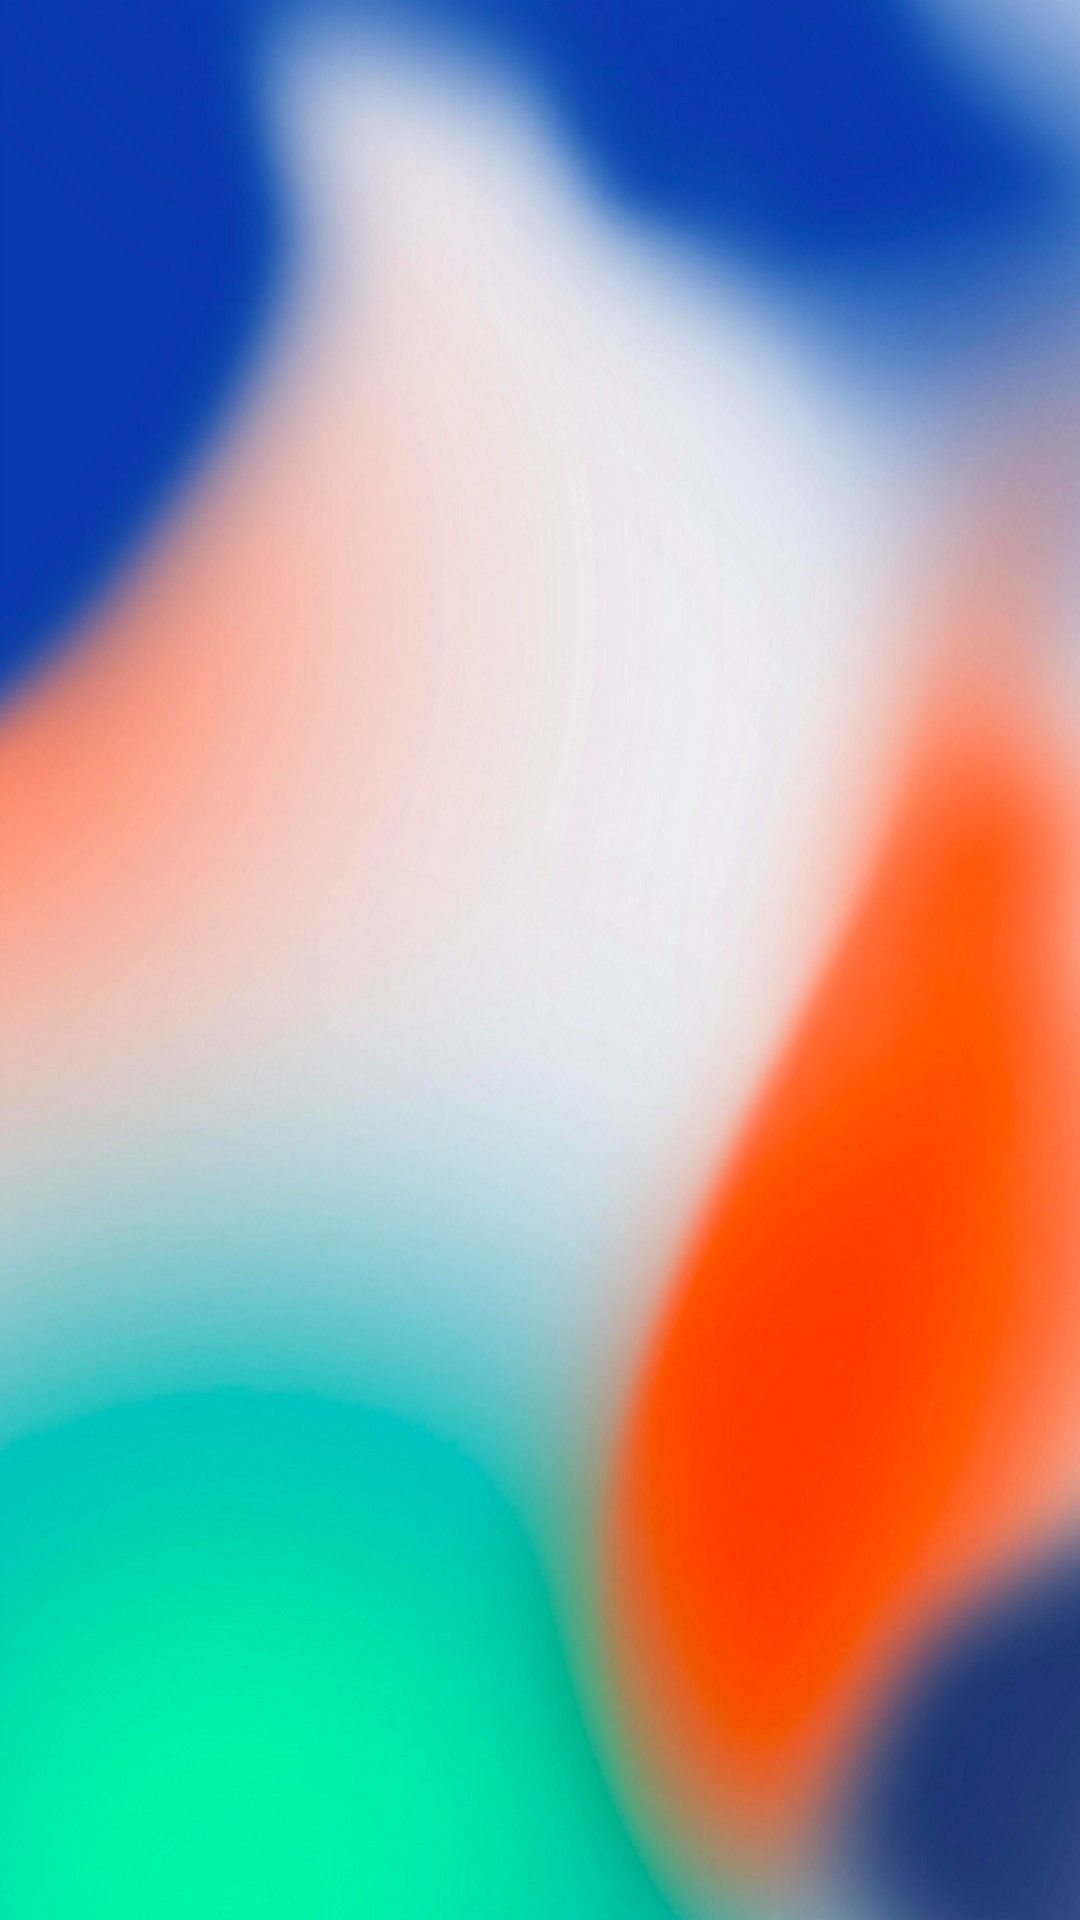 fonds d'écran full hd,bleu,orange,couleur,ciel,l'eau